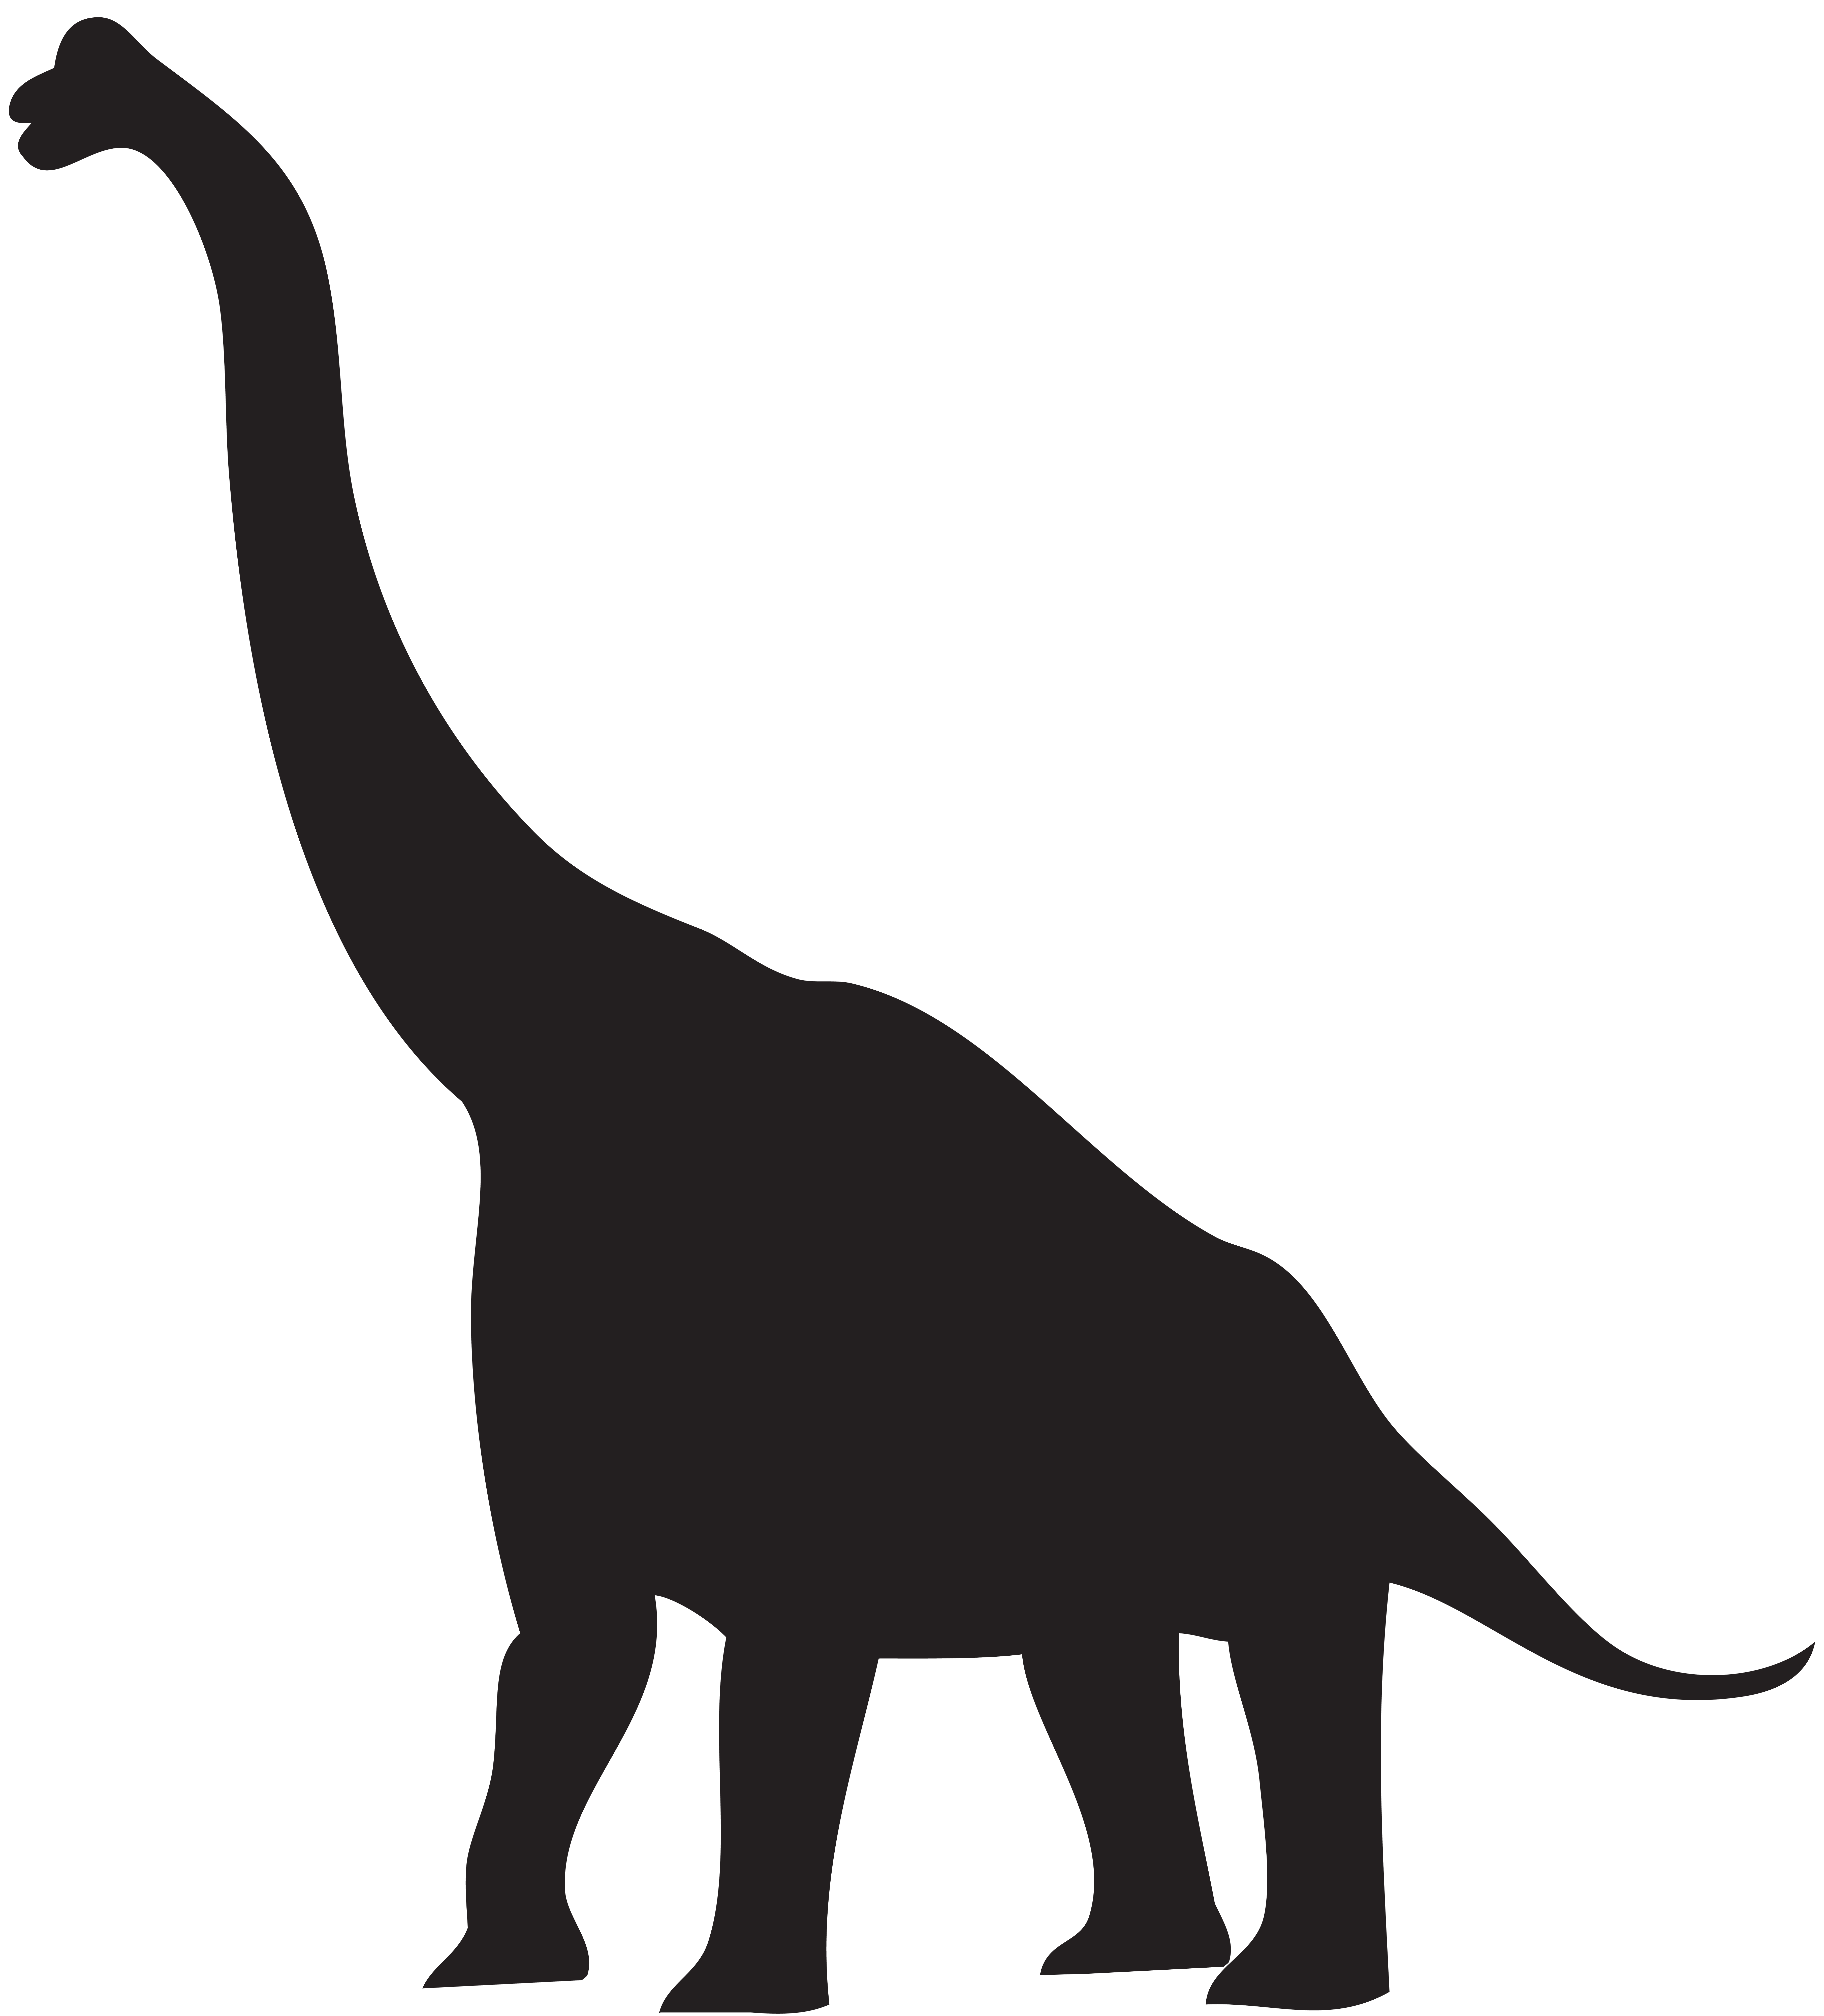 Dinosaur Silhouette PNG Clip Art Image.